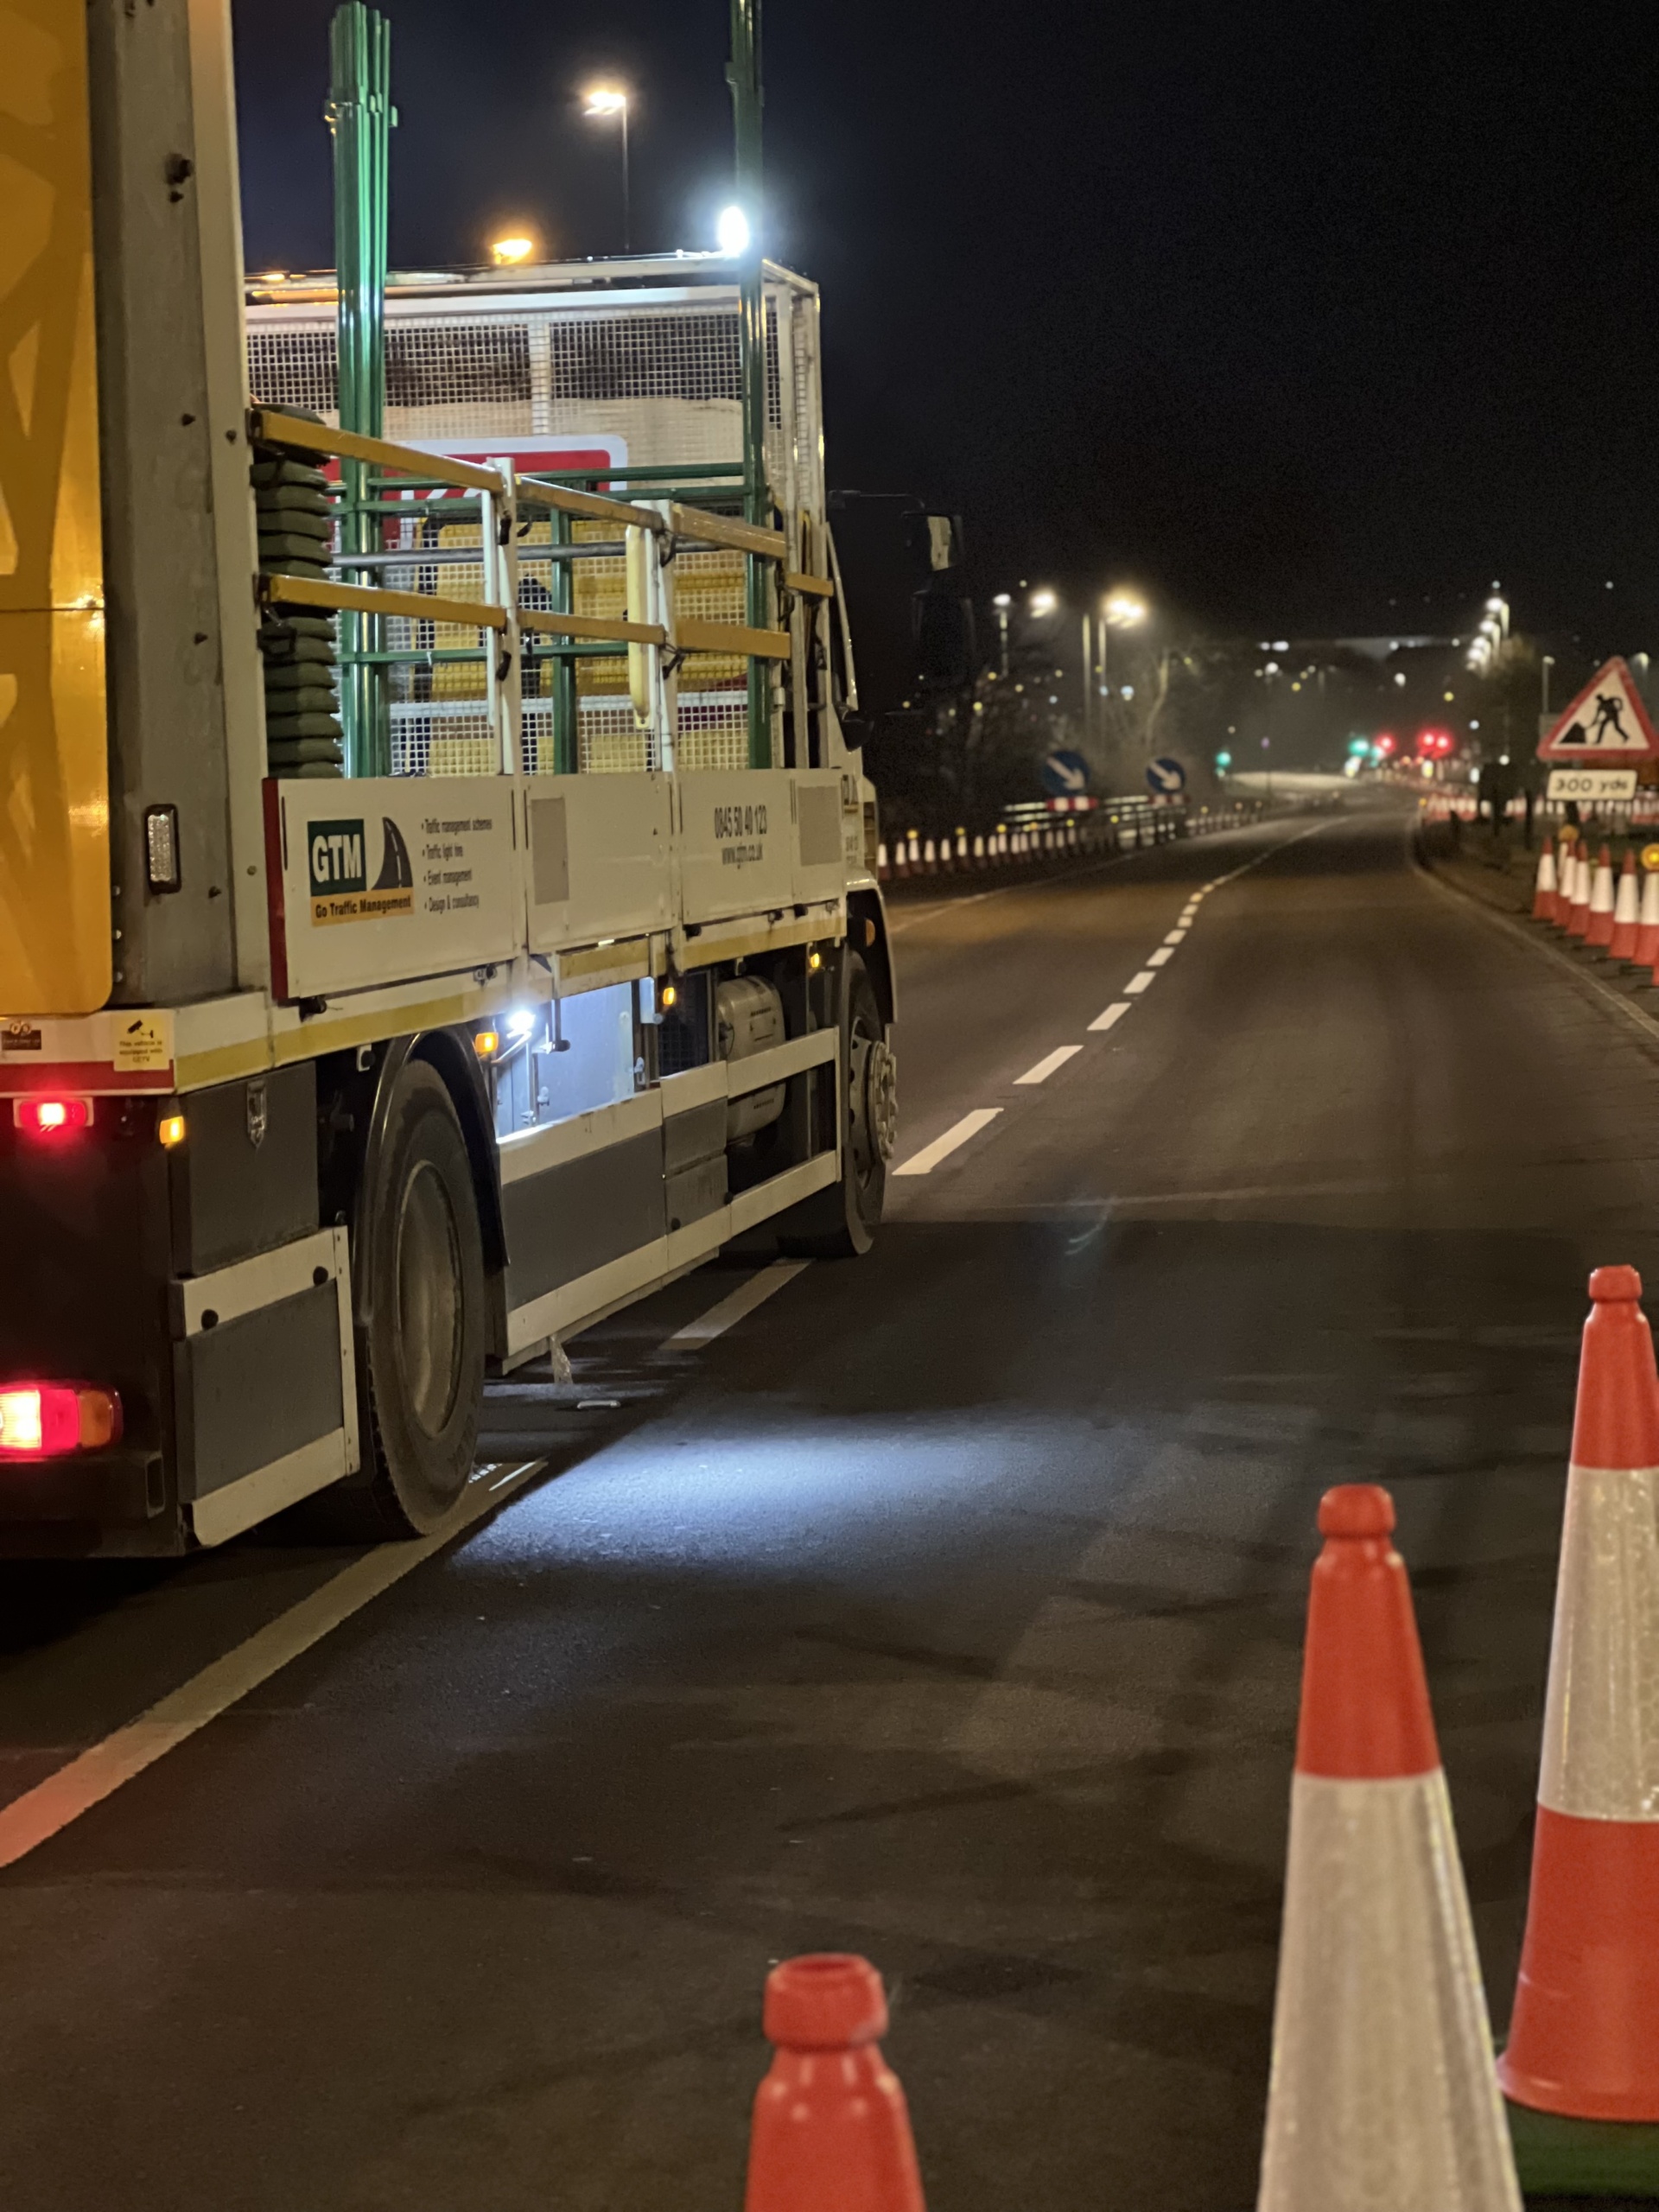 High Impact Vehicle on lane closure at night